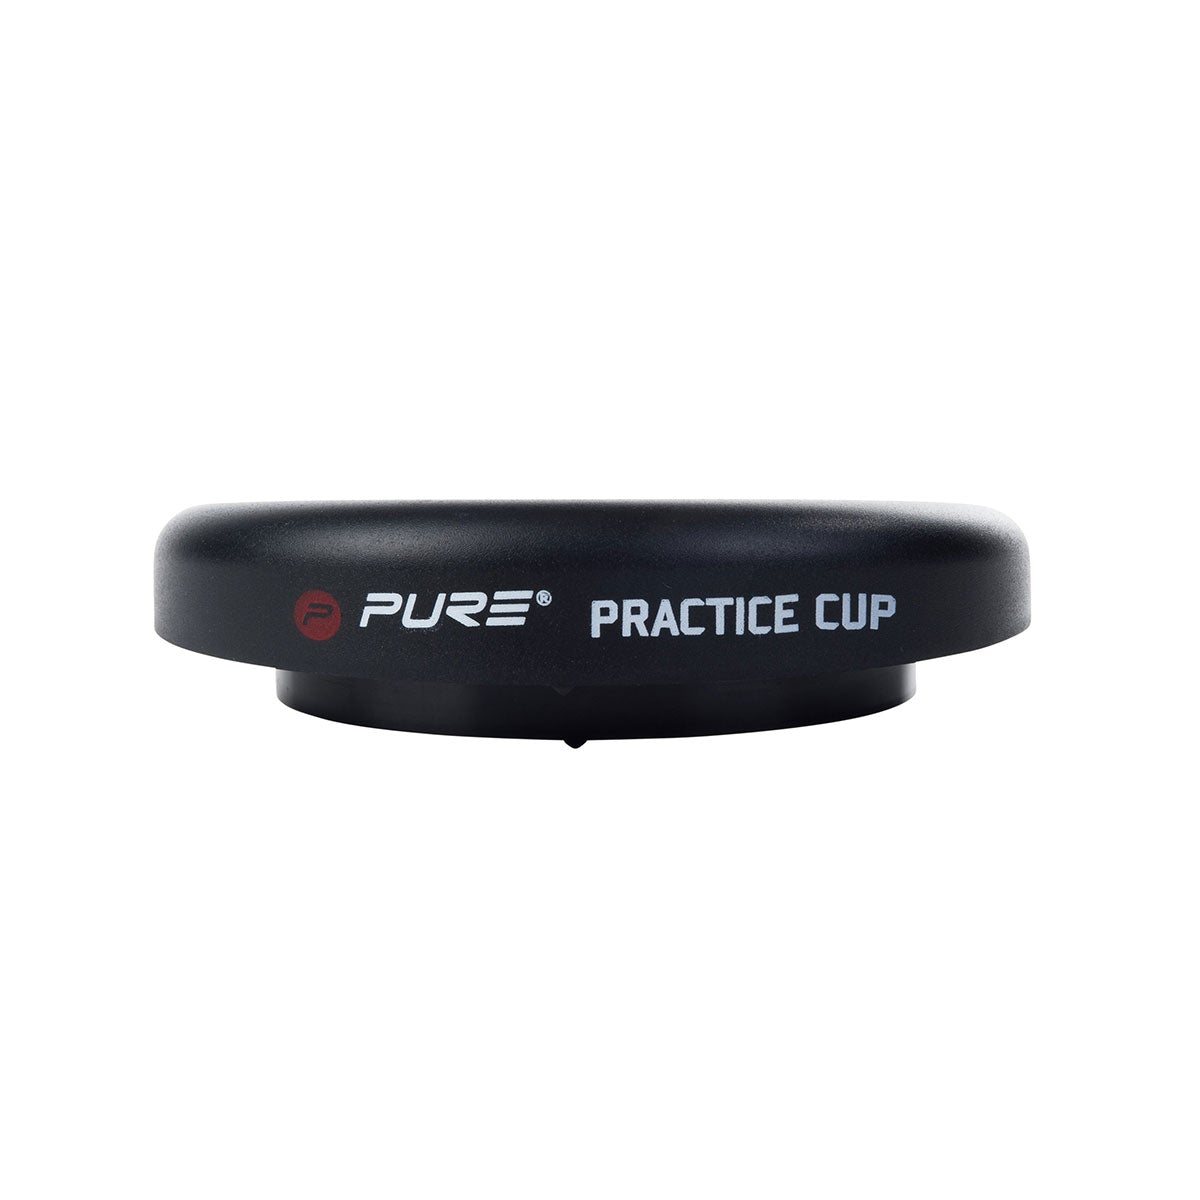 Pure 2 improve practice cup